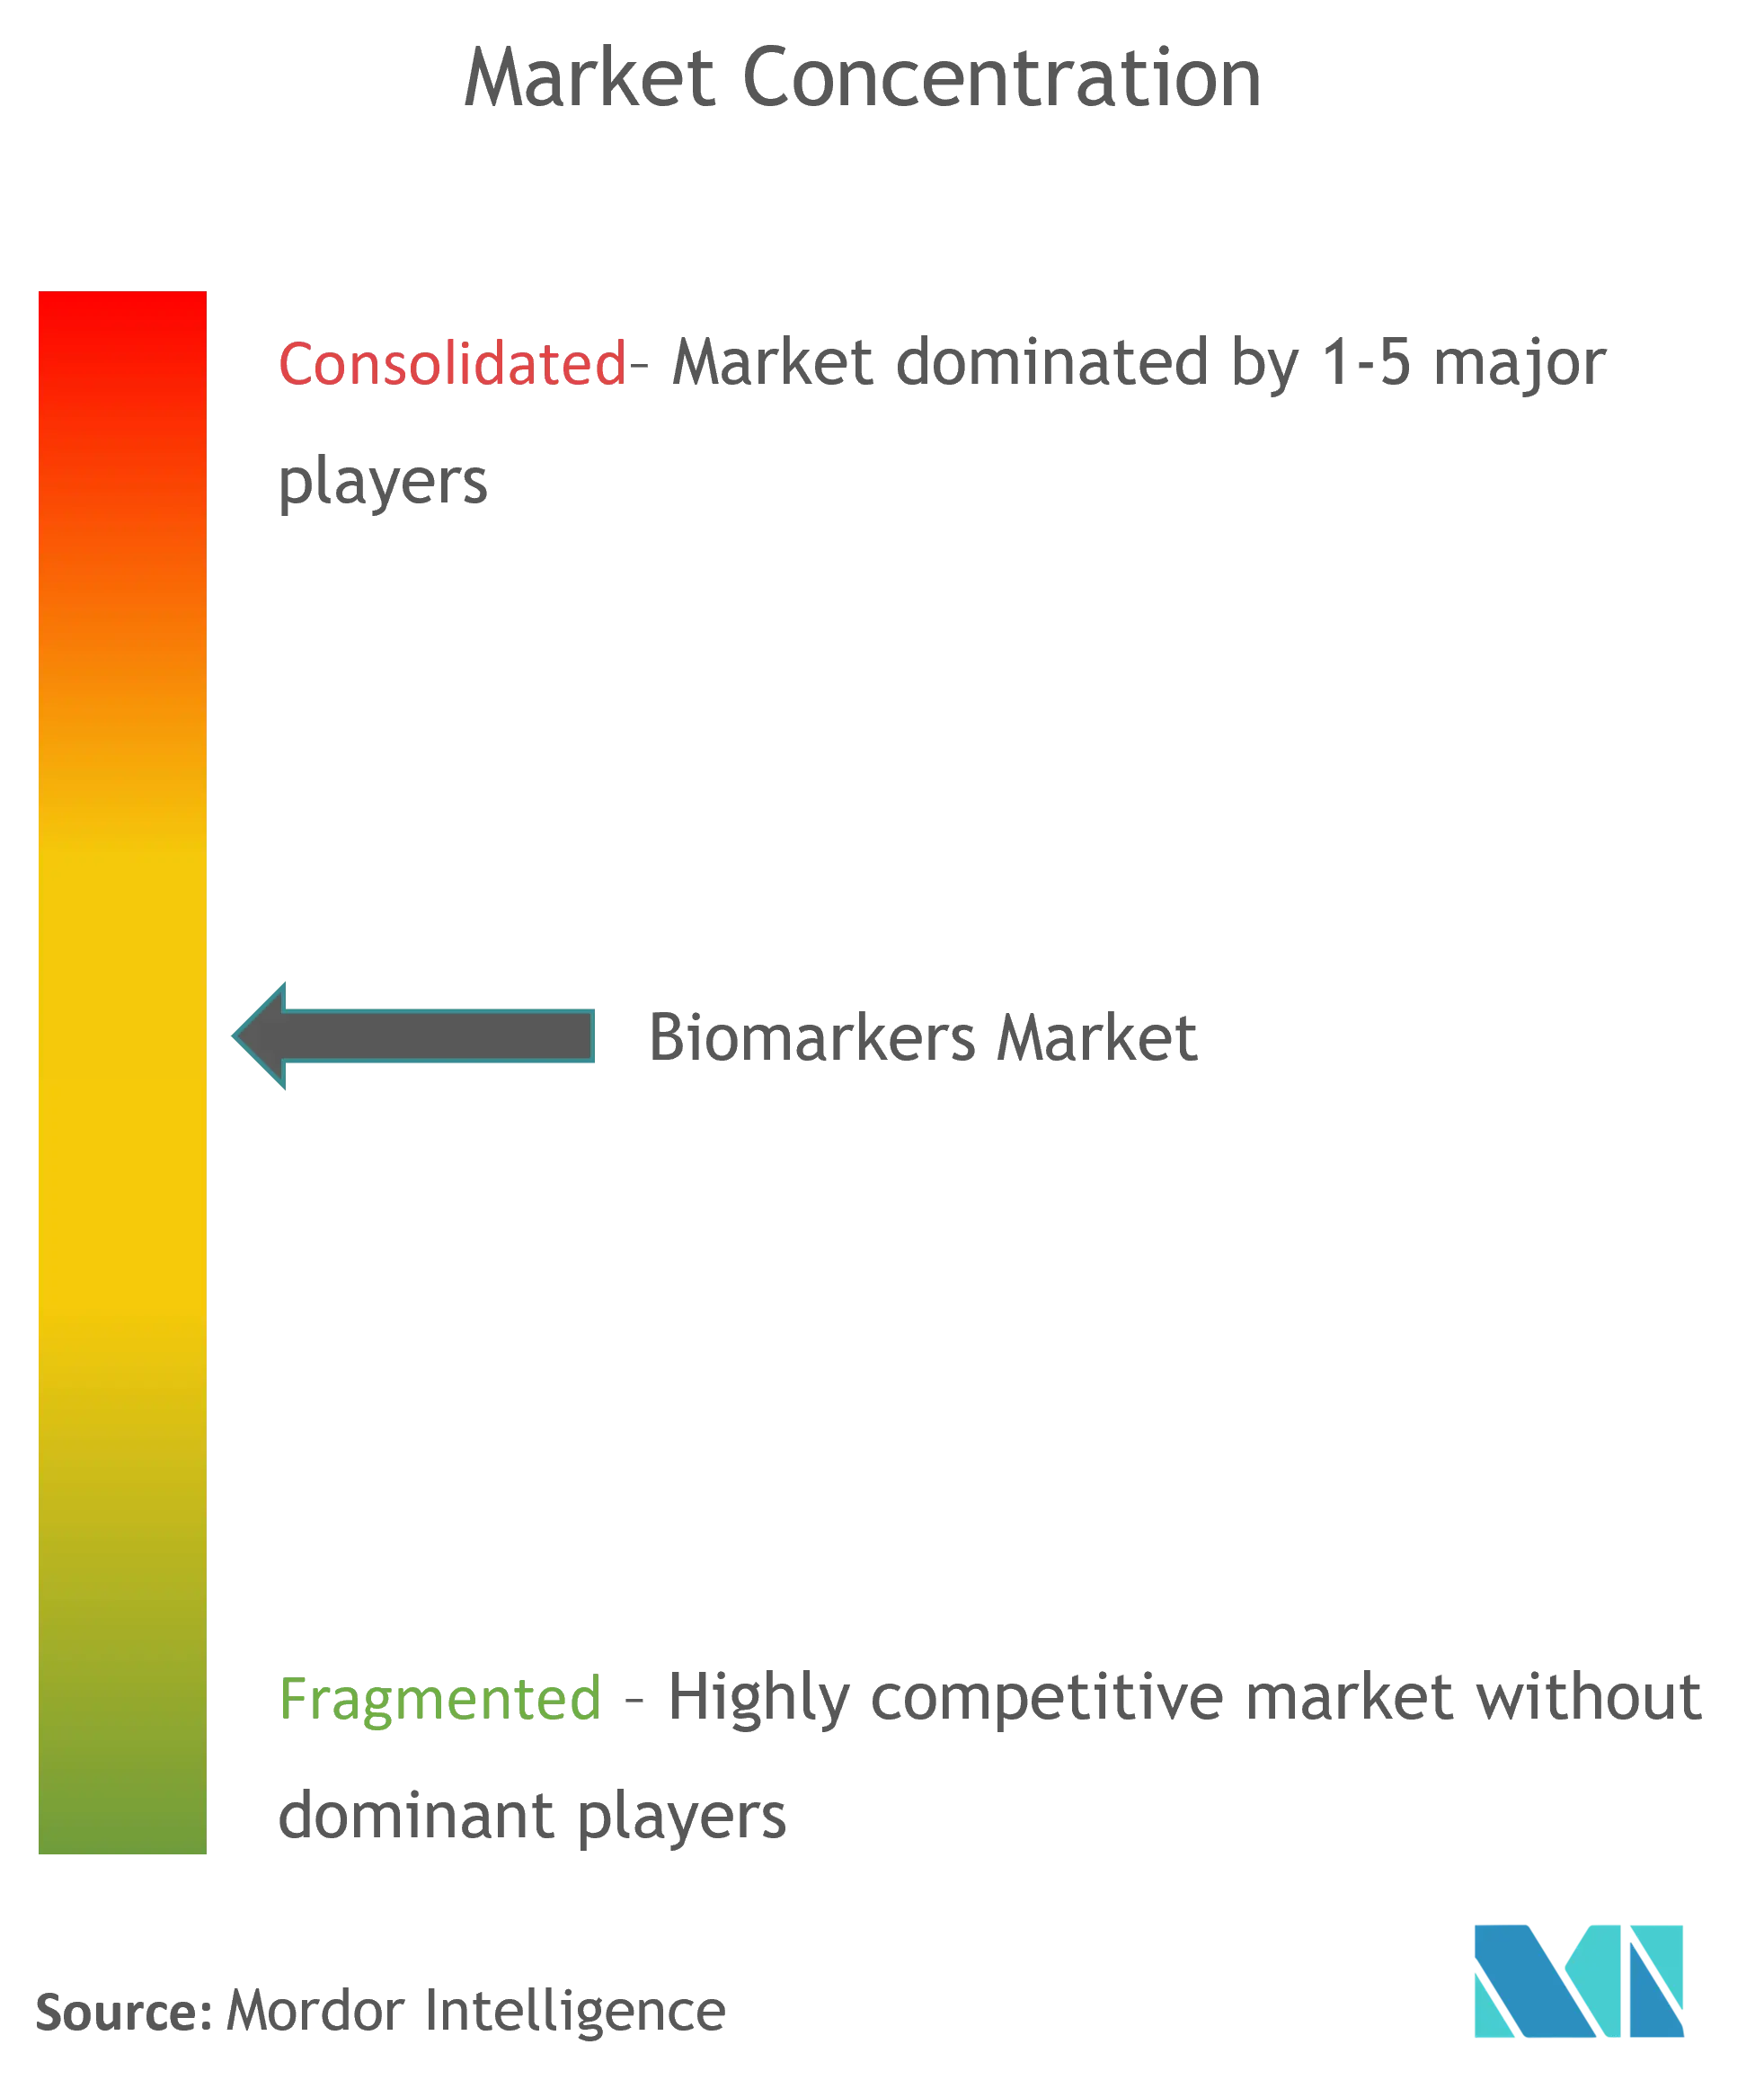 Biomarkers Market Concentration